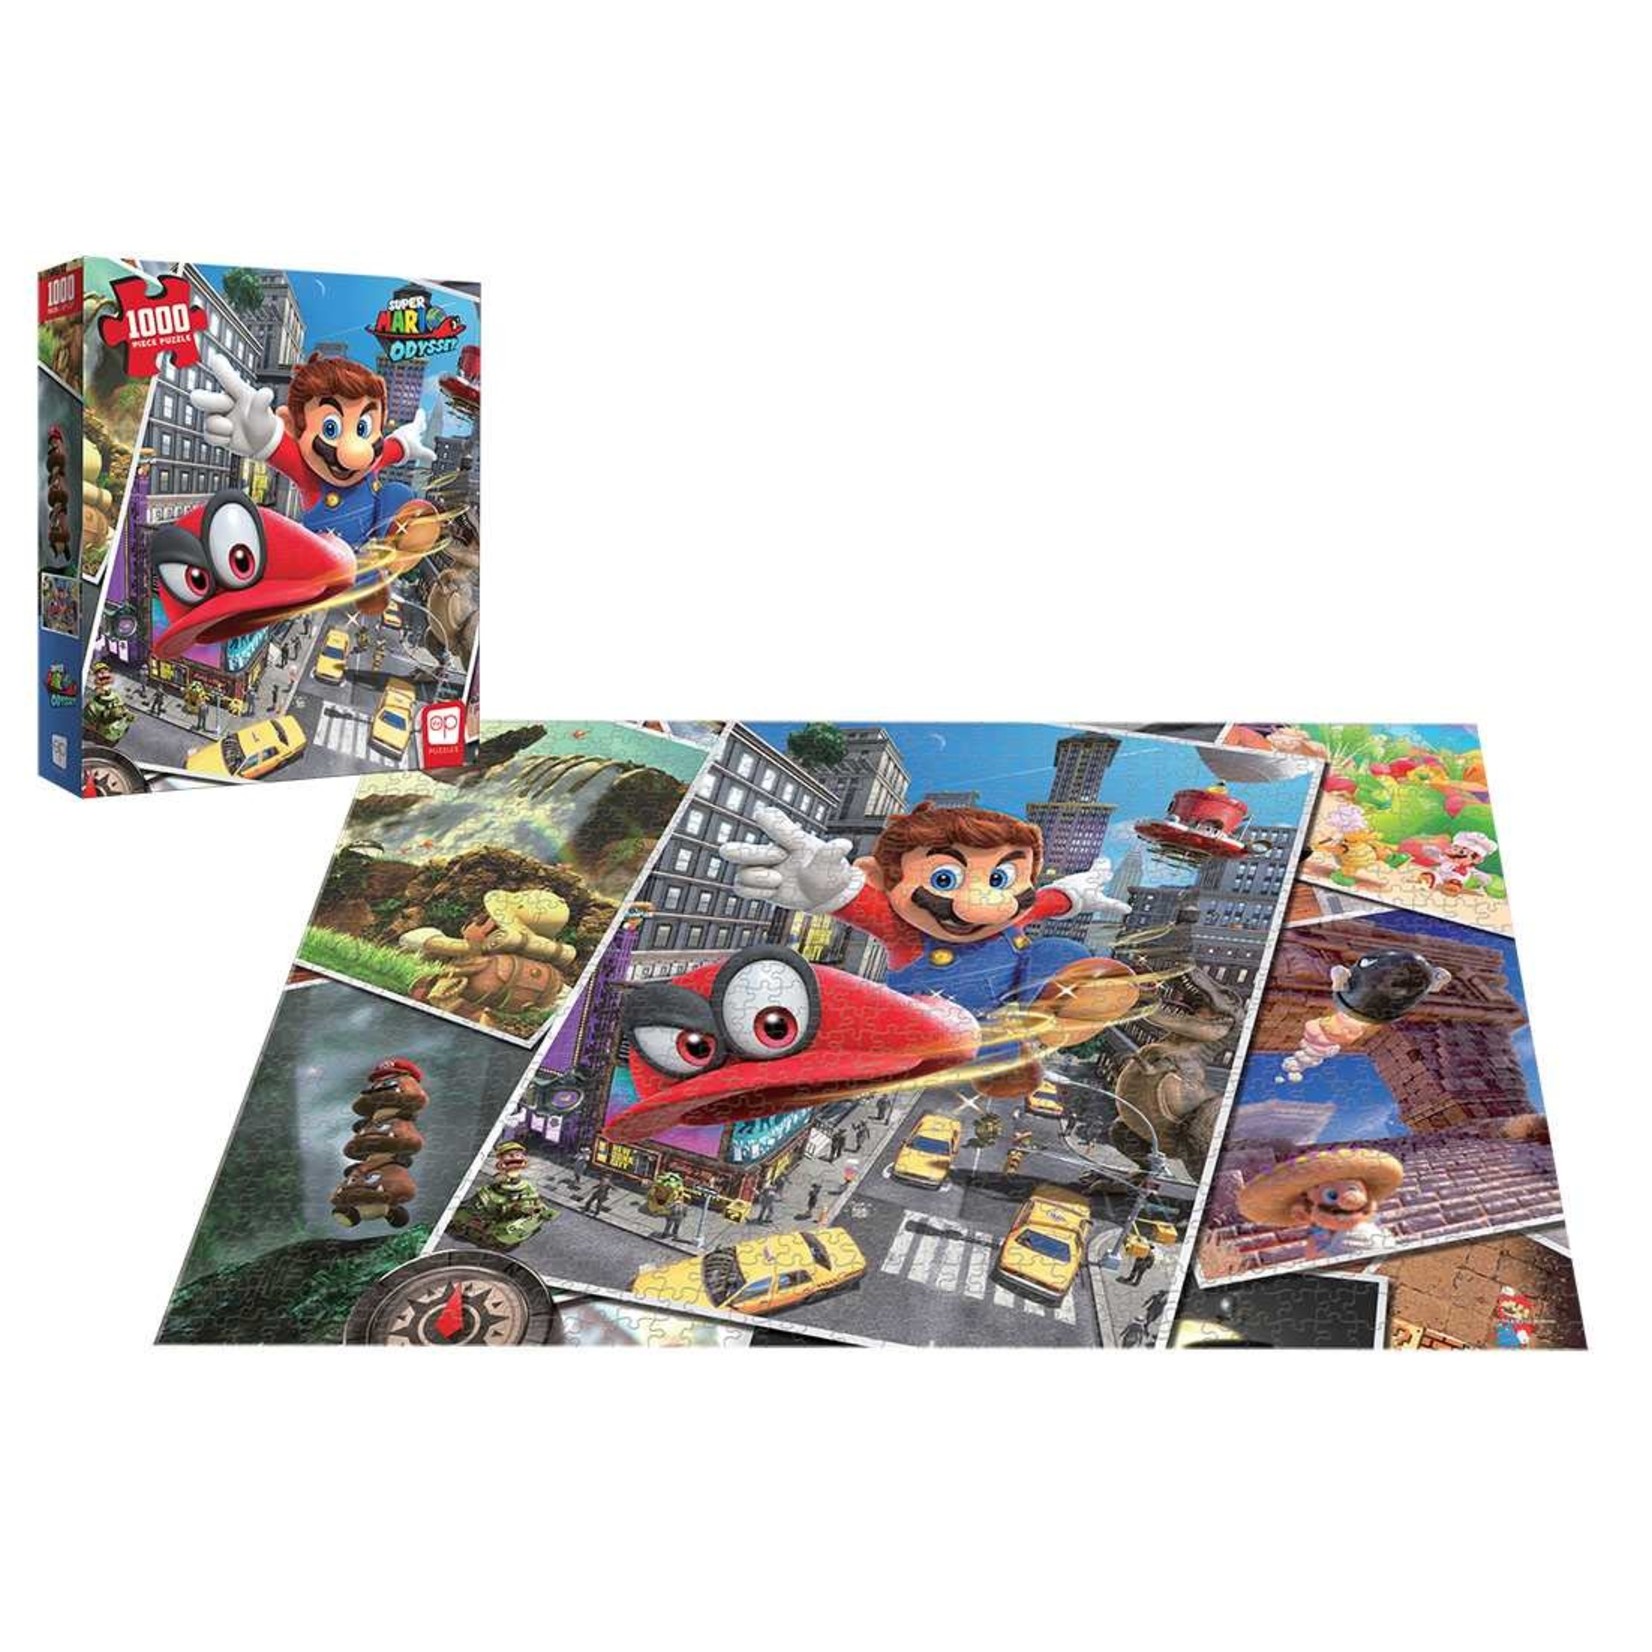 The Op Super Mario Odyssey: Snapshots 1000 Piece Puzzle